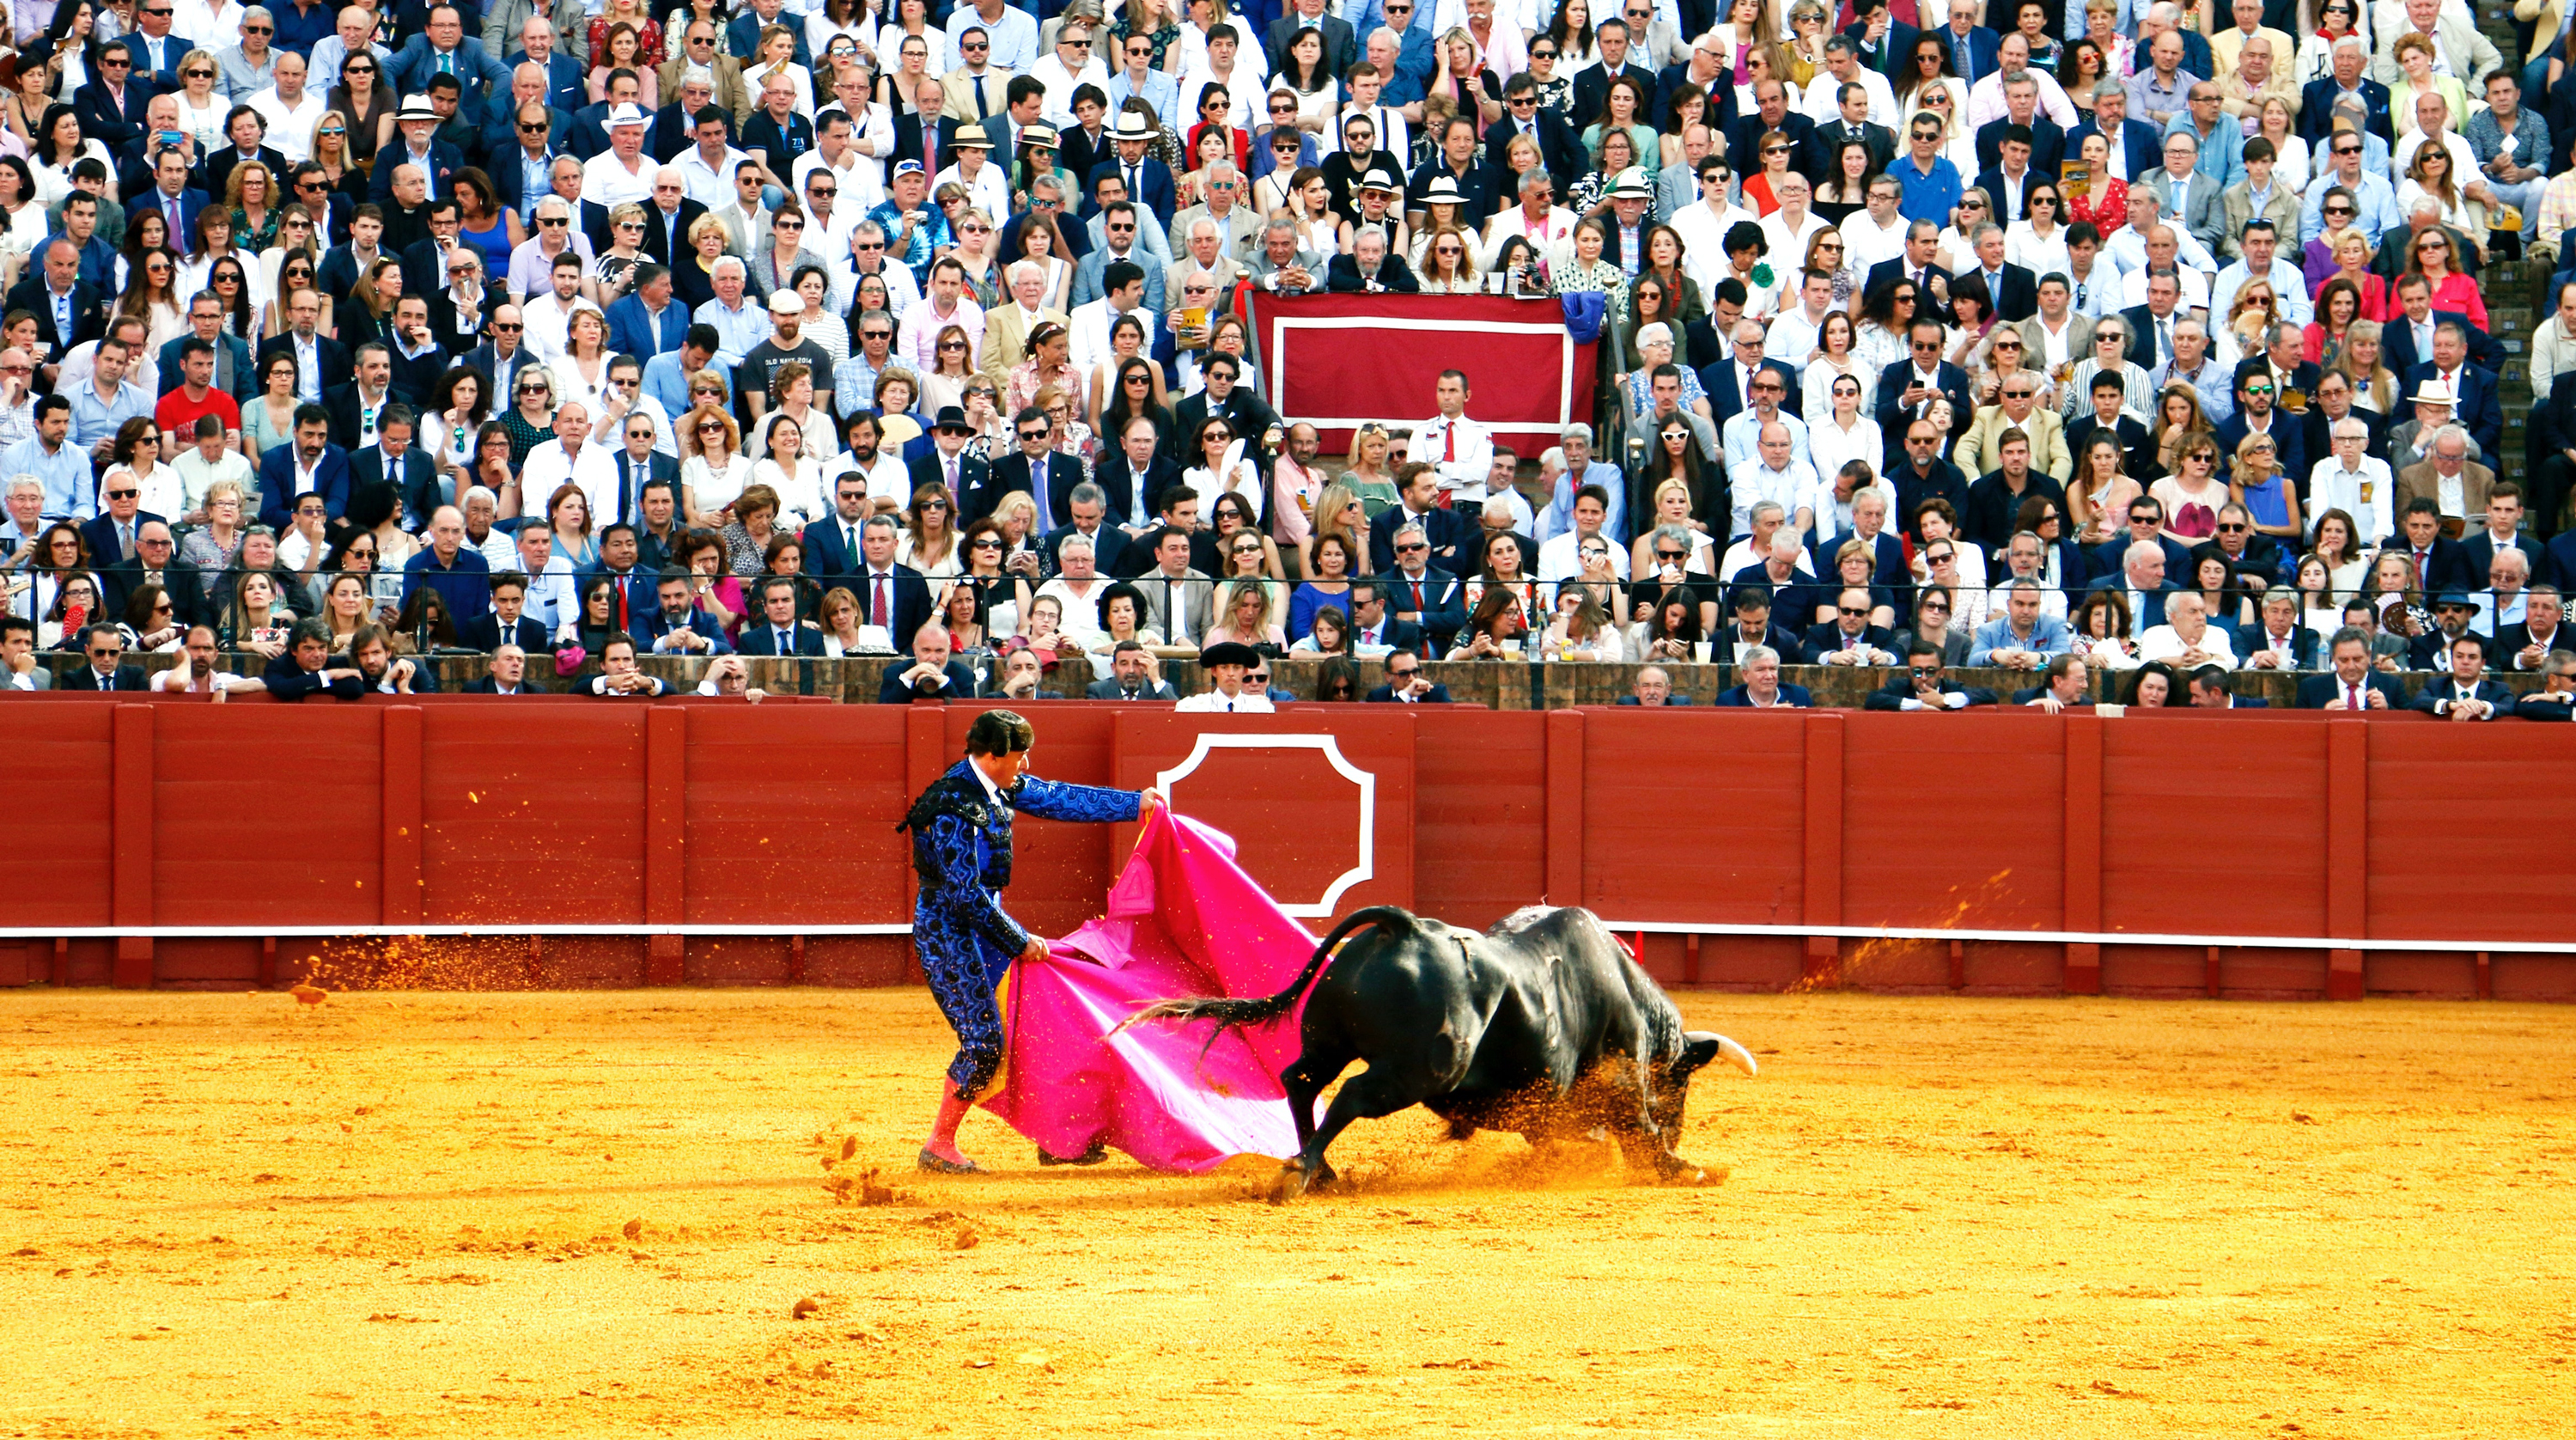 VegNews.Bullfighting.Pexels